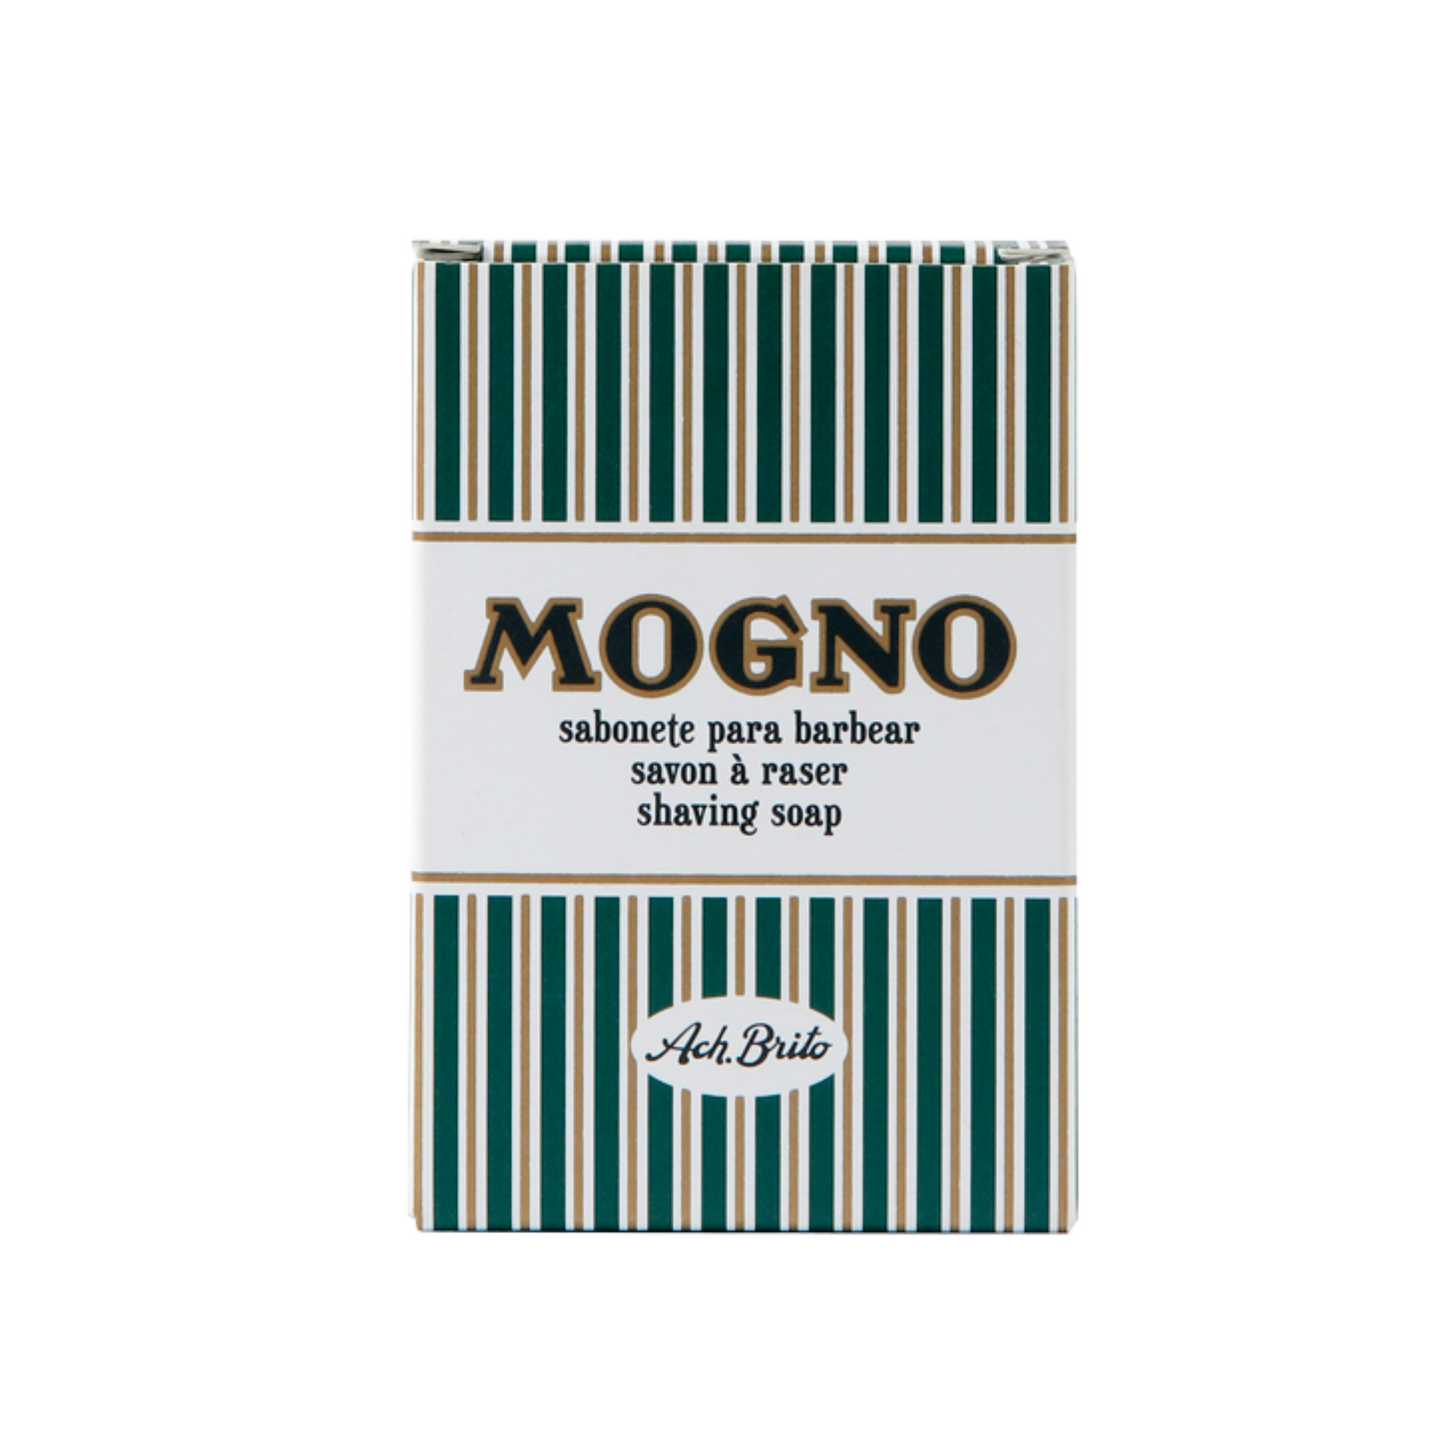 Primary image of Mogno Shaving Soap